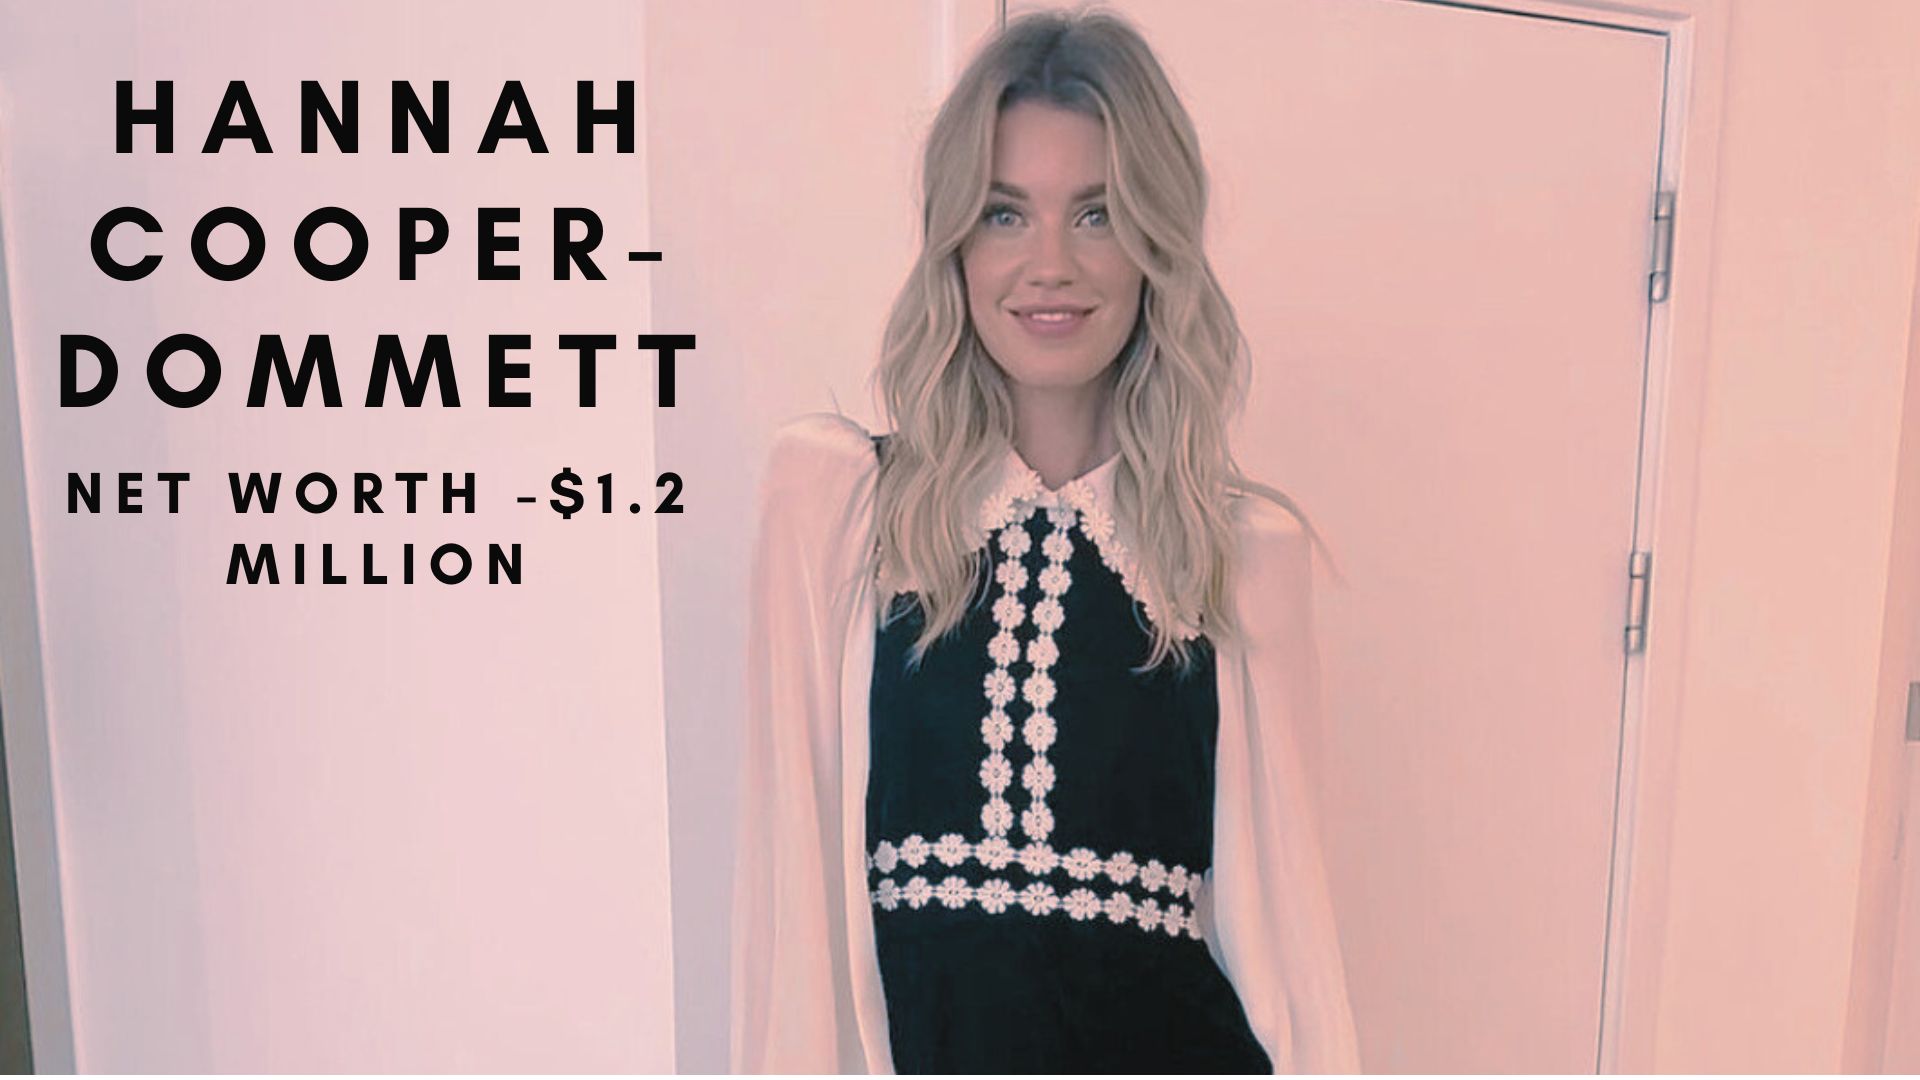 The net worth of Hannah Cooper-Dommett is $1.2 million. (Credits: @hannah_cooper_ Instagram)